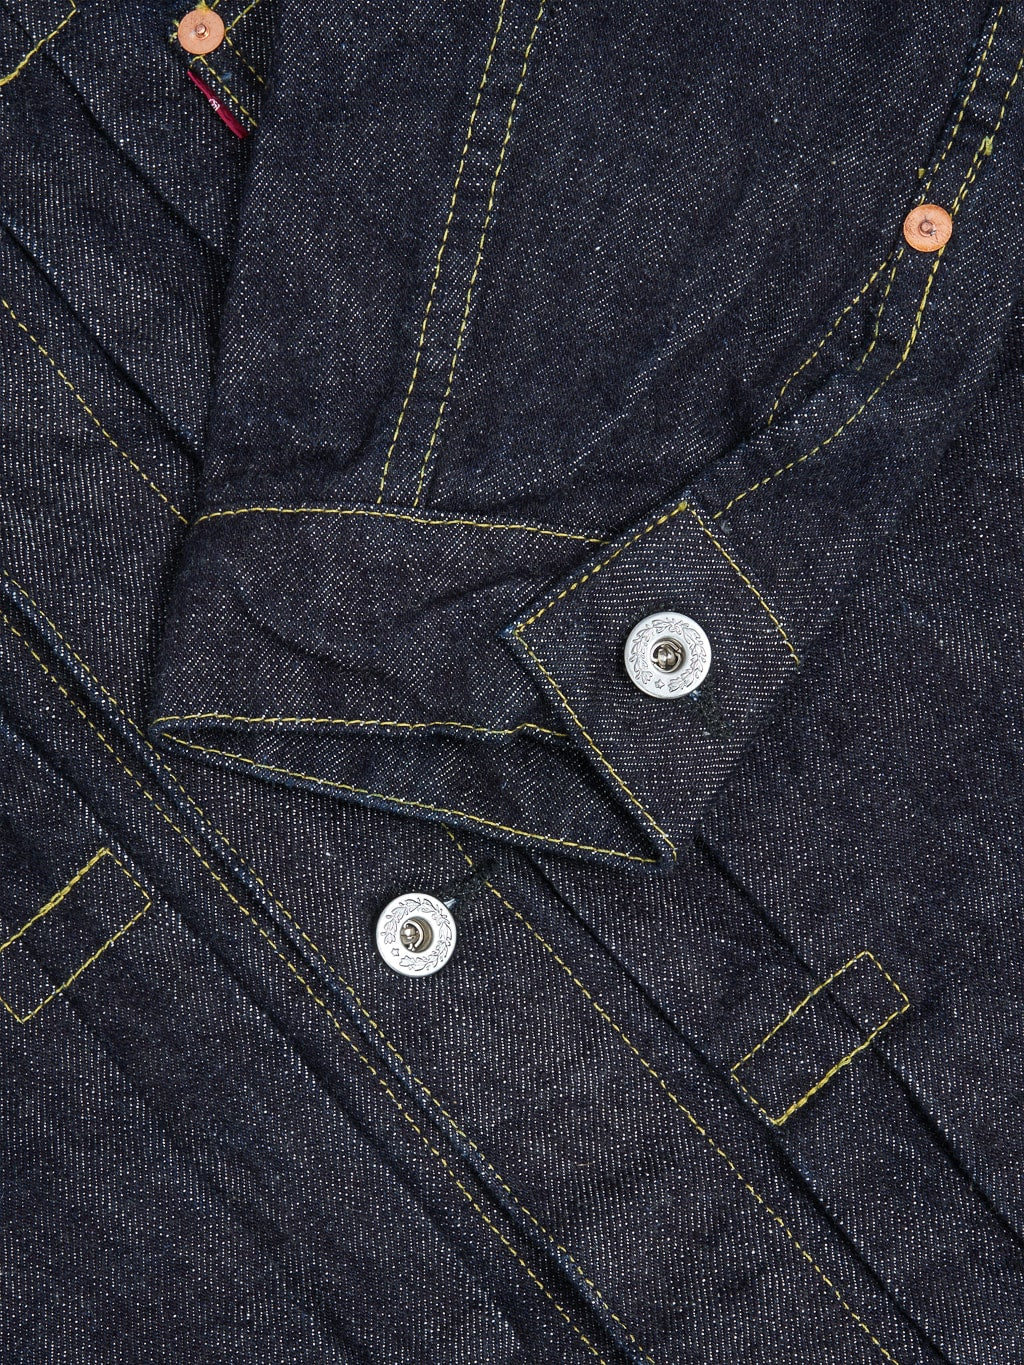 tcb 40s denim jacket sleeve cuff stitching